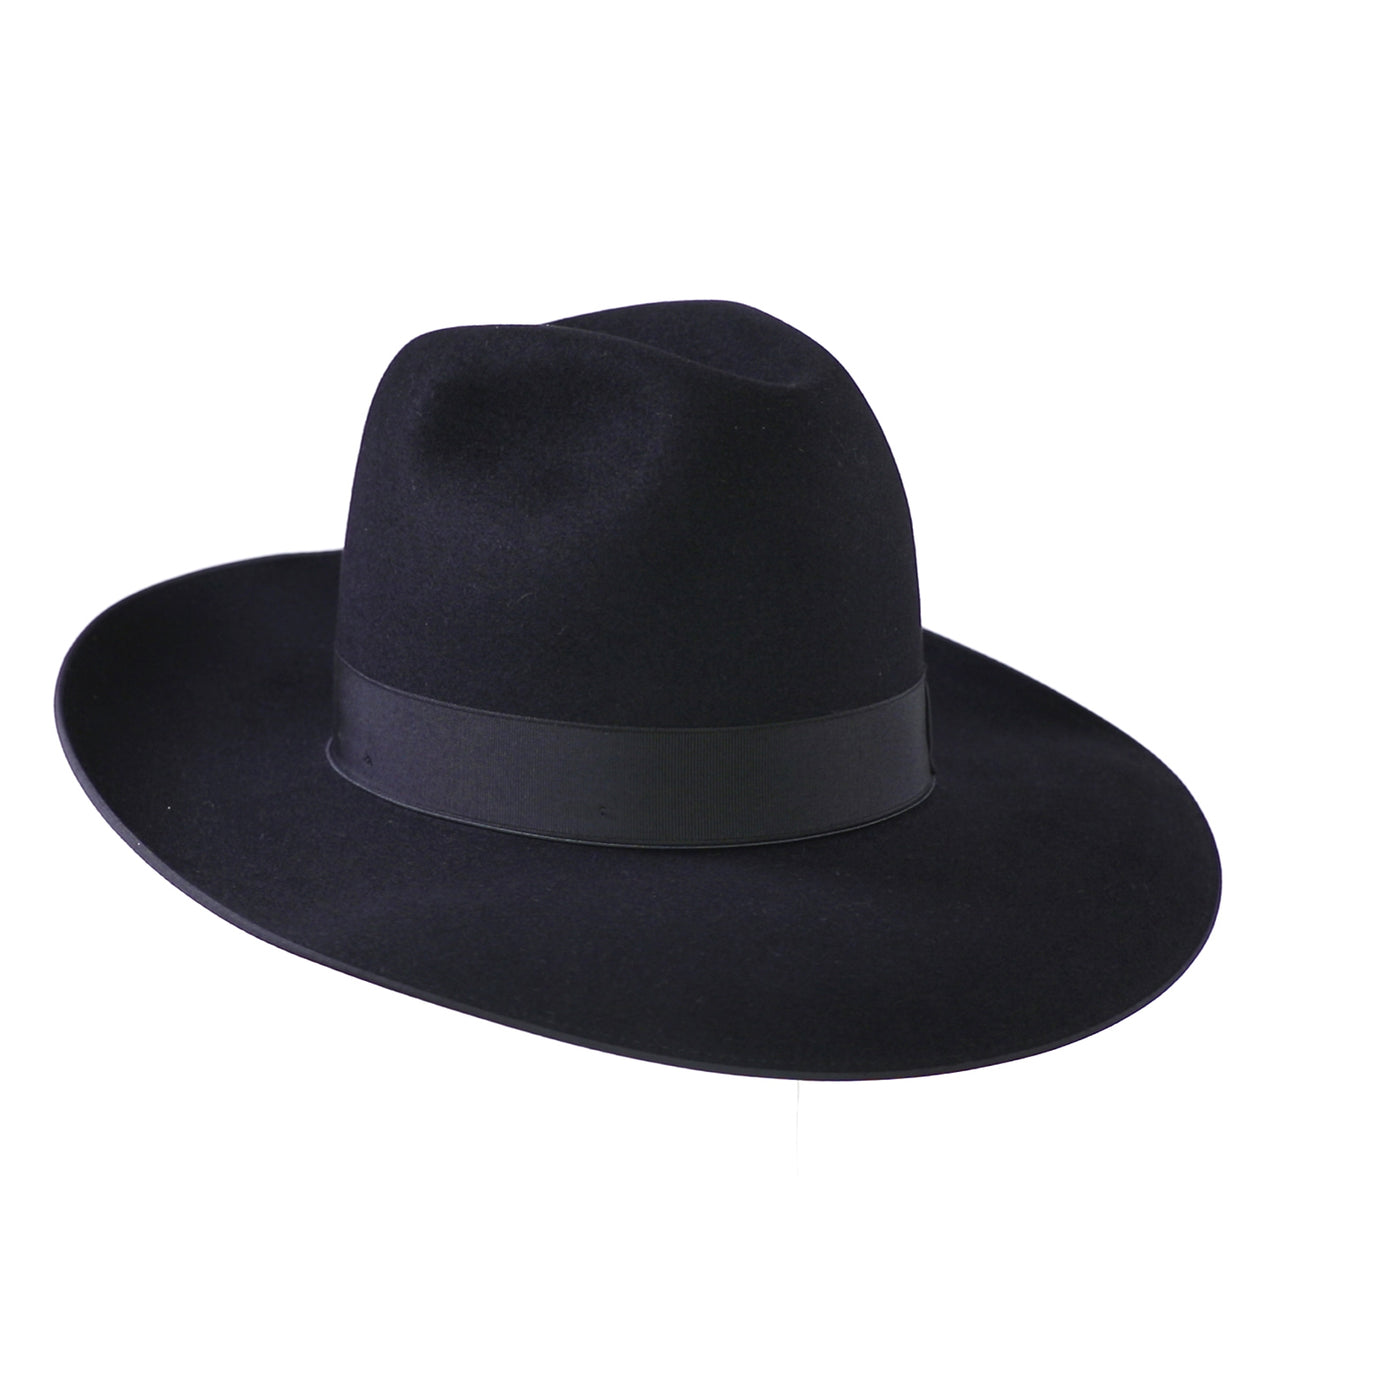 Luccini 312, product_type] - Borsalino for Atica fedora hat